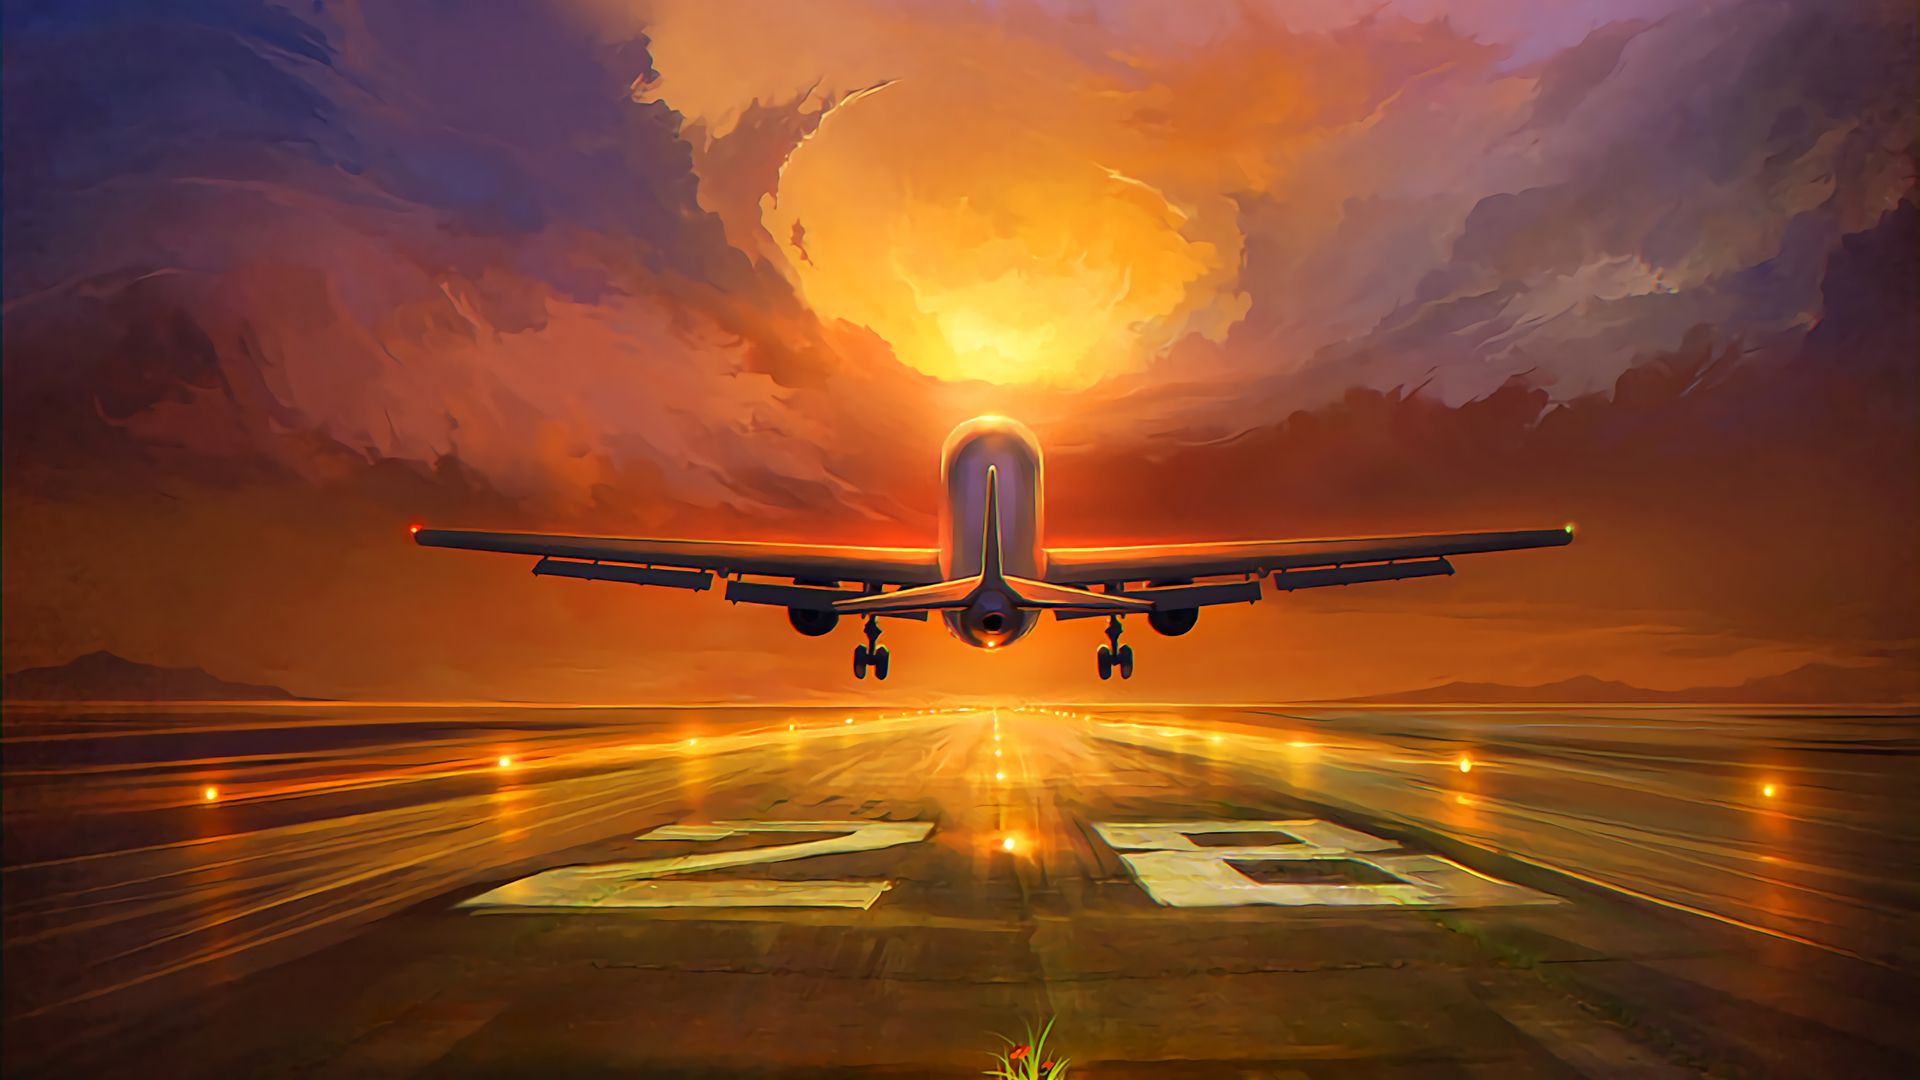 Download wallpaper 1920x1080 plane, runway, art, sunset, sky full hd, hdtv,  fhd, 1080p hd background